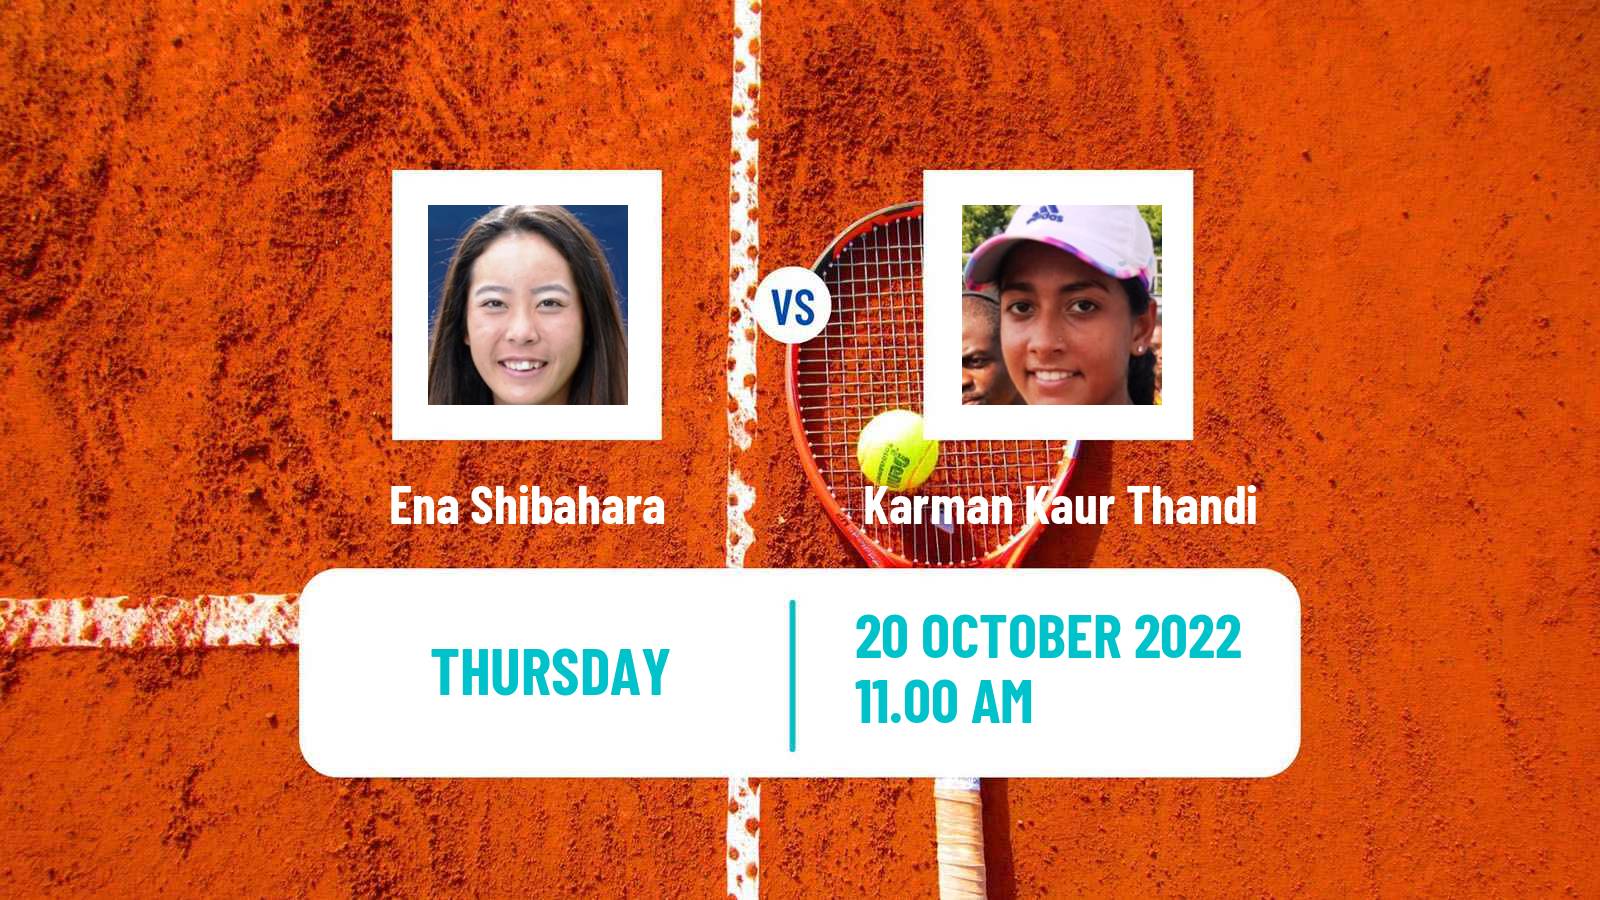 Tennis ITF Tournaments Ena Shibahara - Karman Kaur Thandi